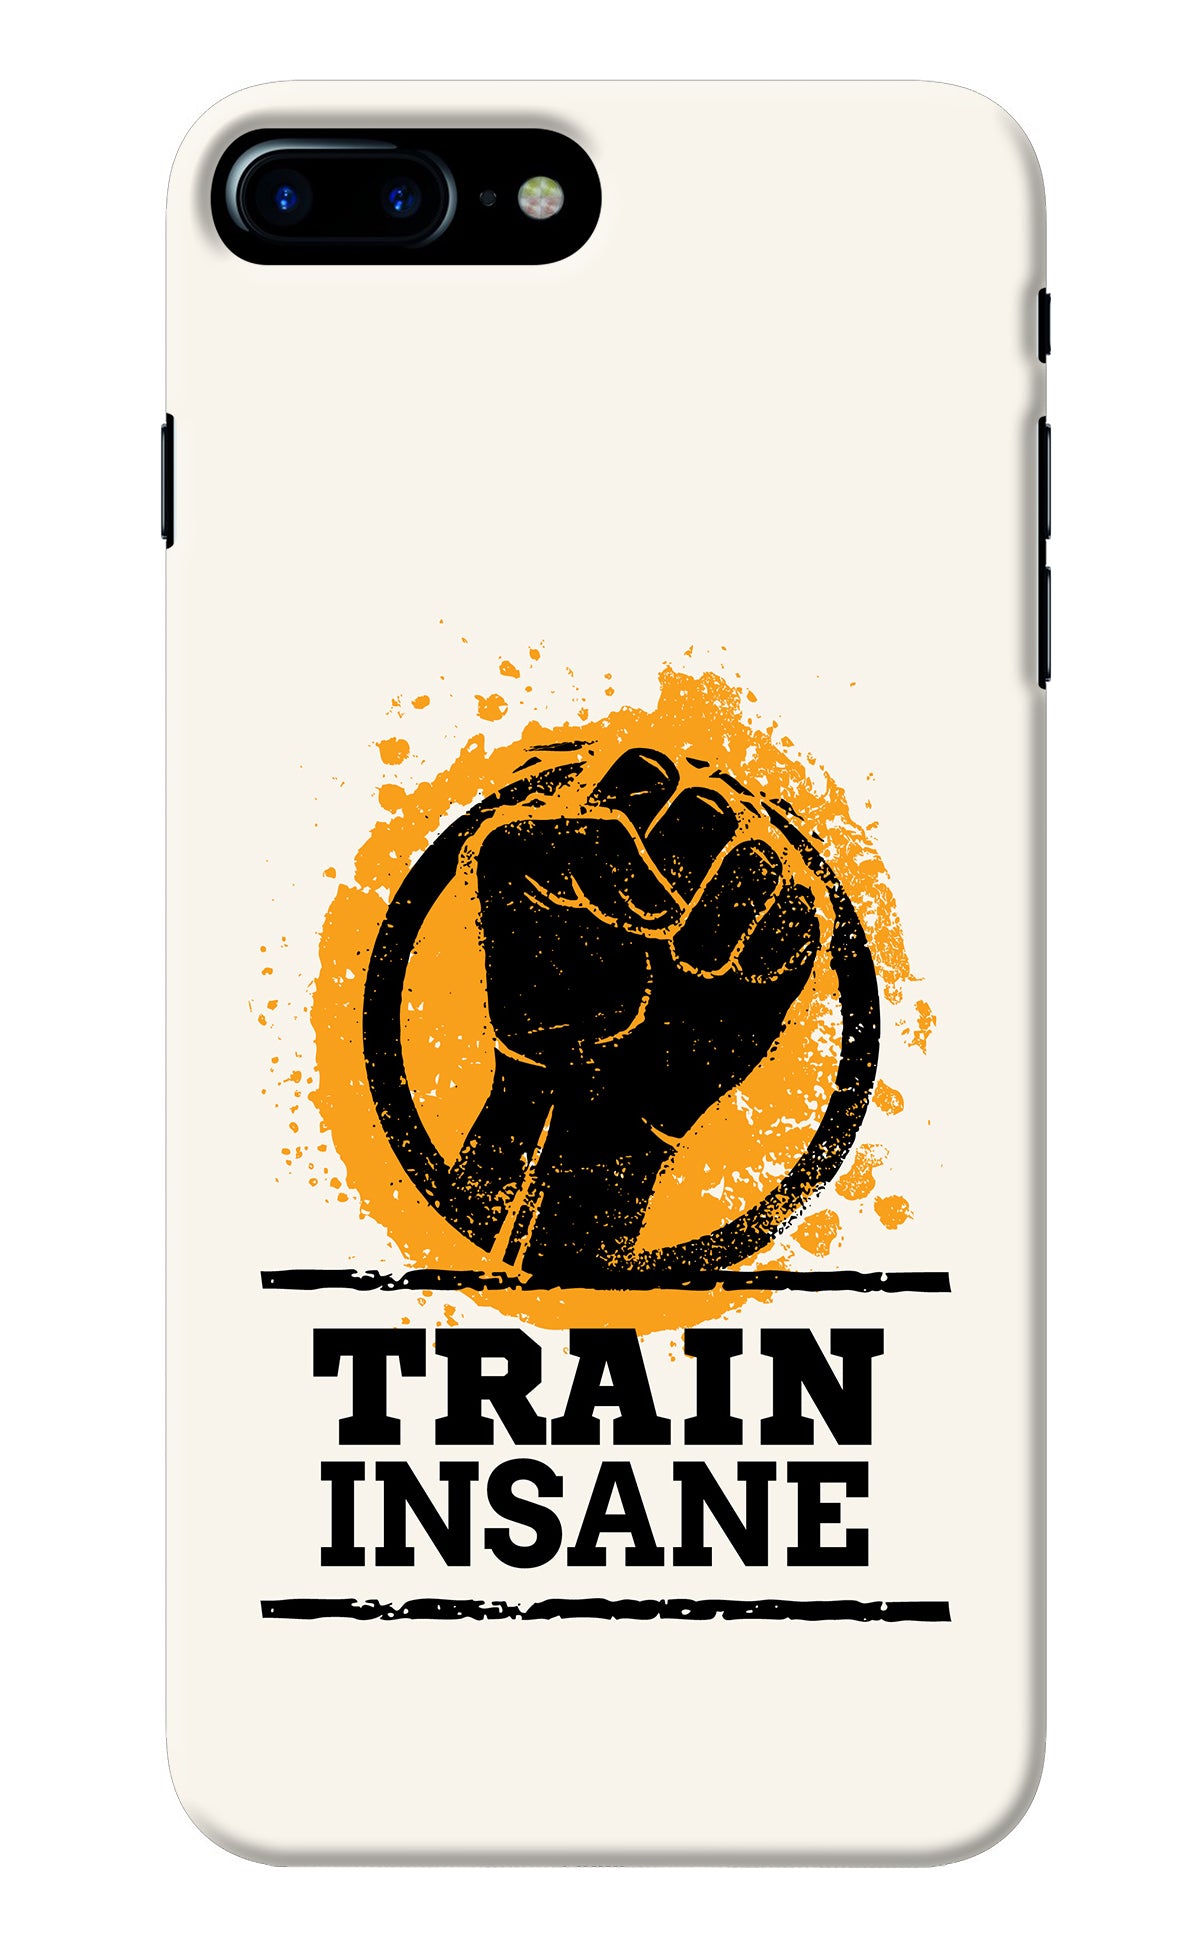 Train Insane iPhone 8 Plus Back Cover